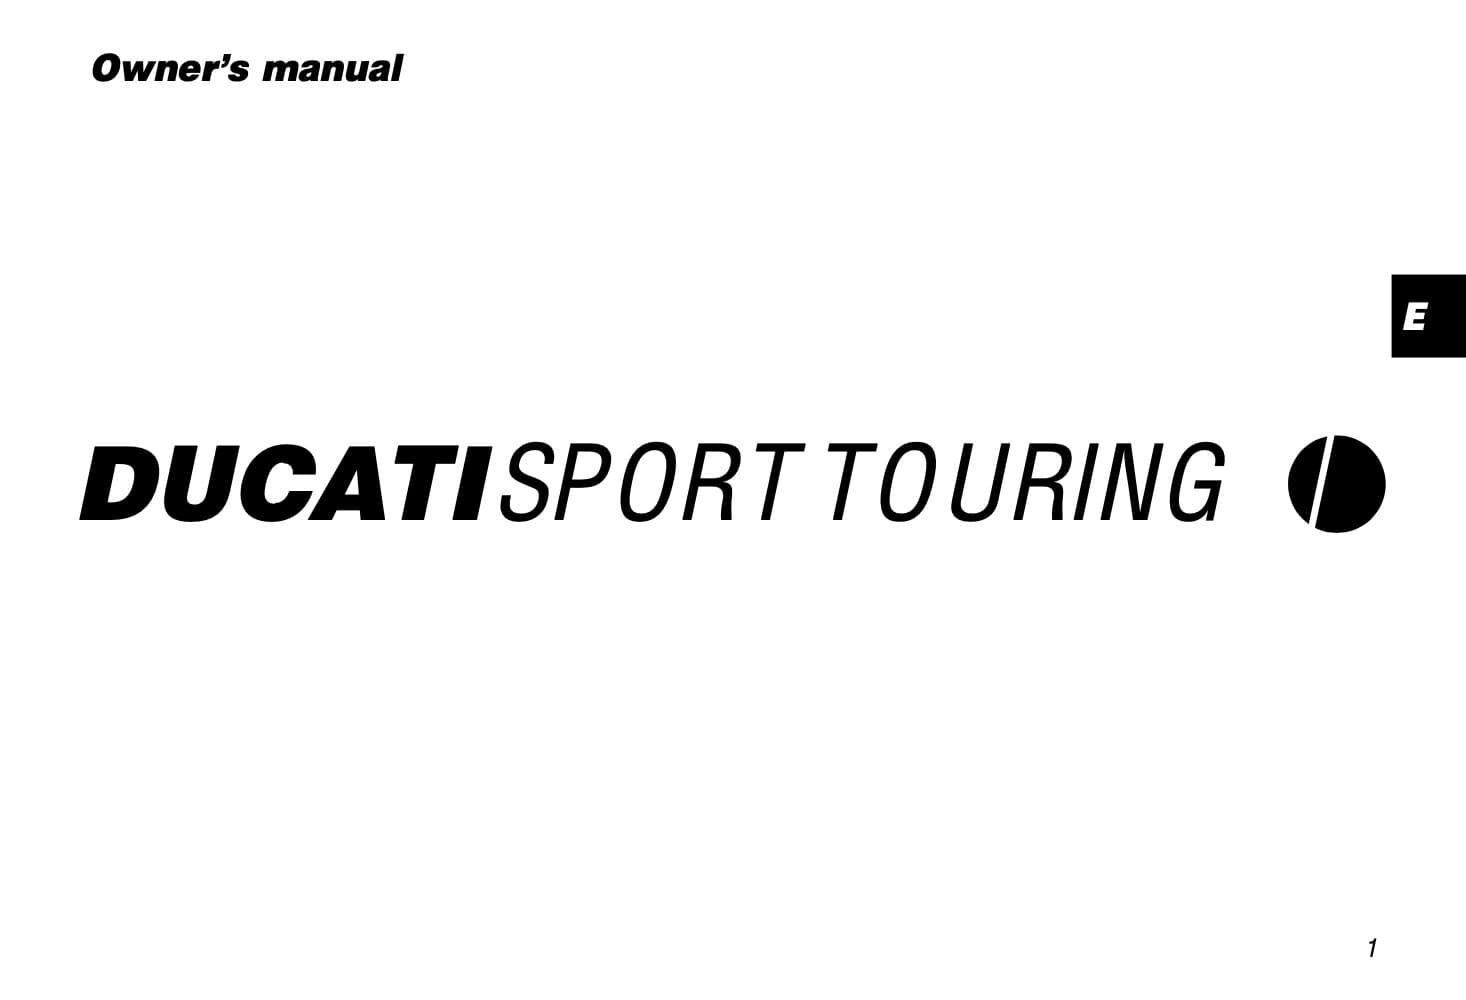 Ducati ST4 manual maintenance schedule screenshot 1